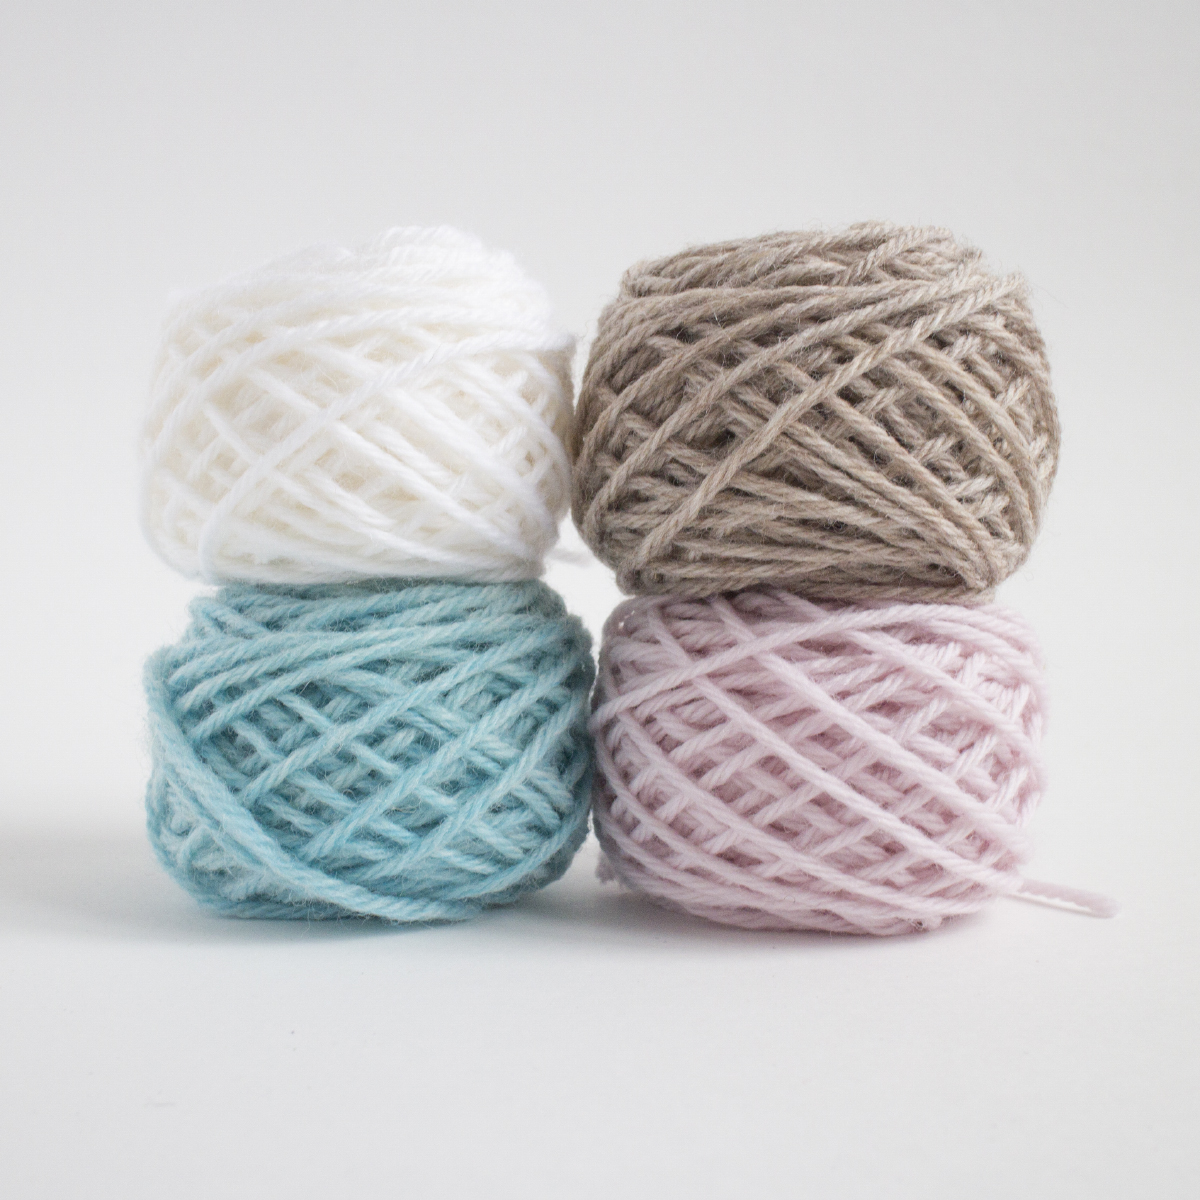 Choosing yarn for amigurumi